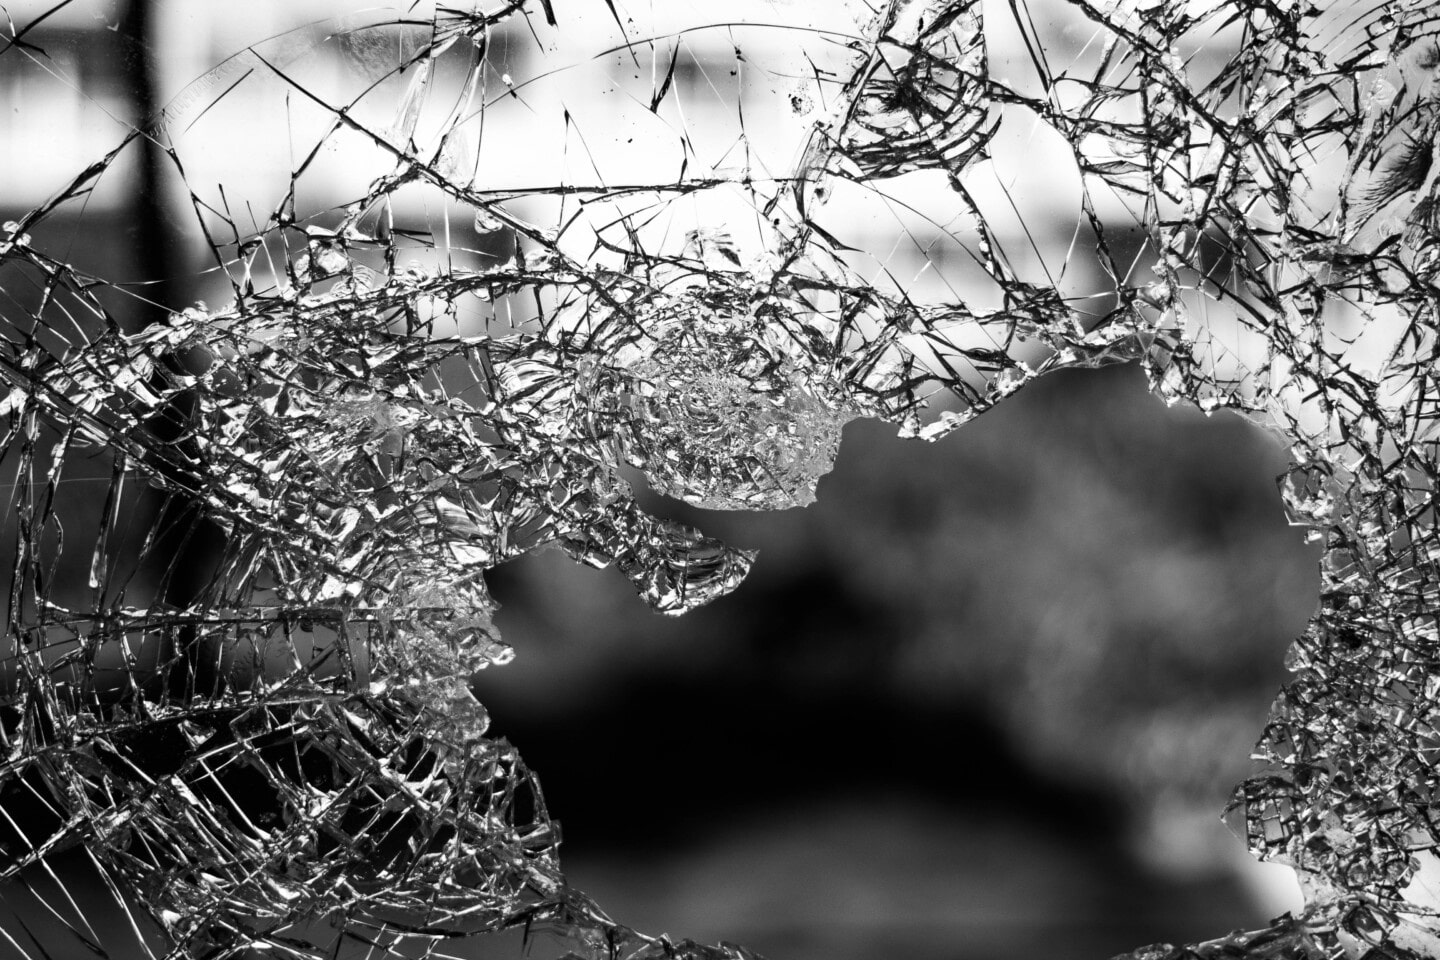 Photograph of shattered glass by Jilbert Ebrahimi on Unsplash